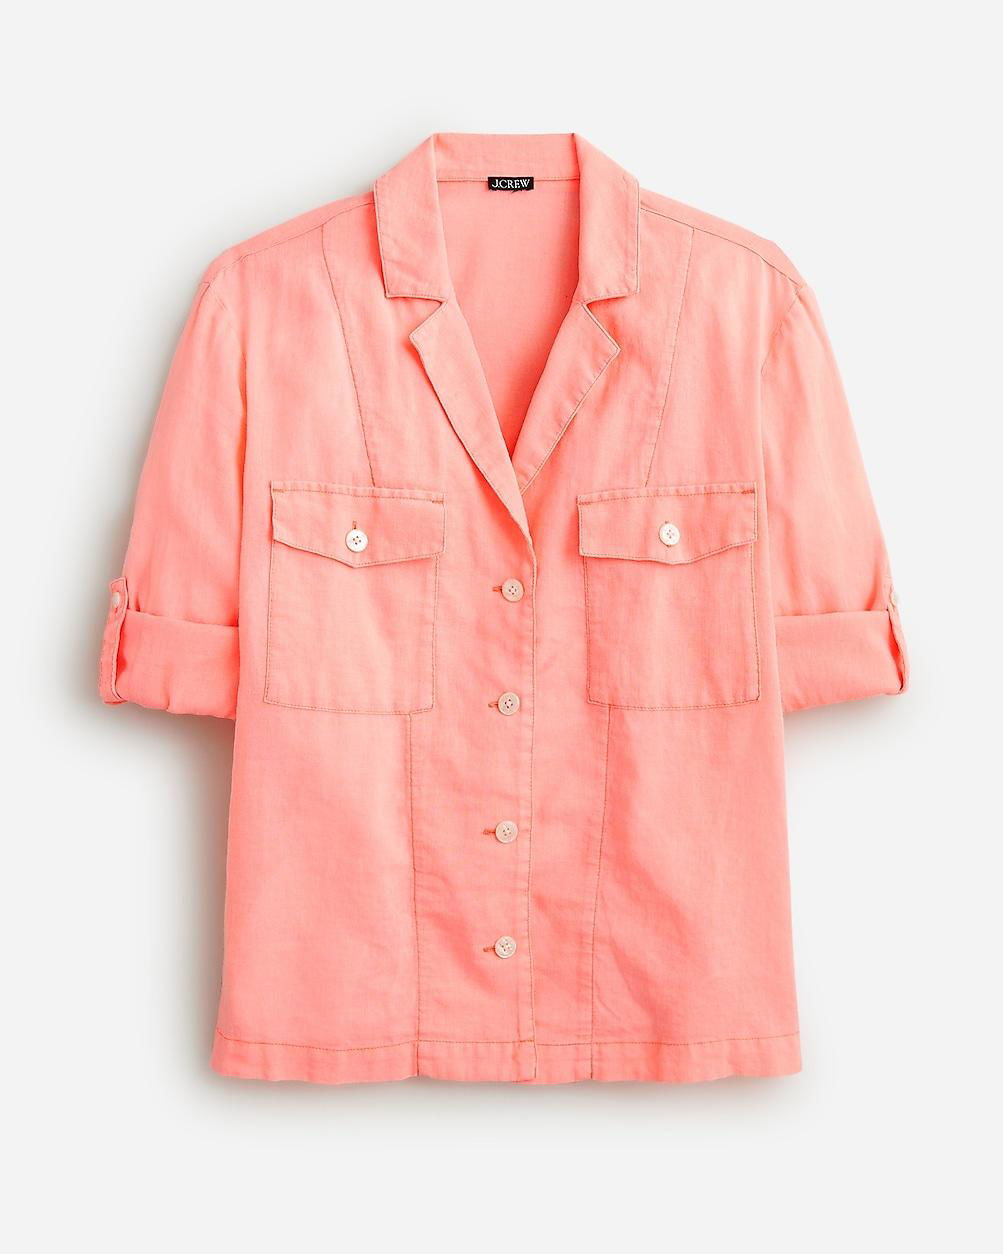 Camp-collar shirt in featherweight linen blend by J.CREW